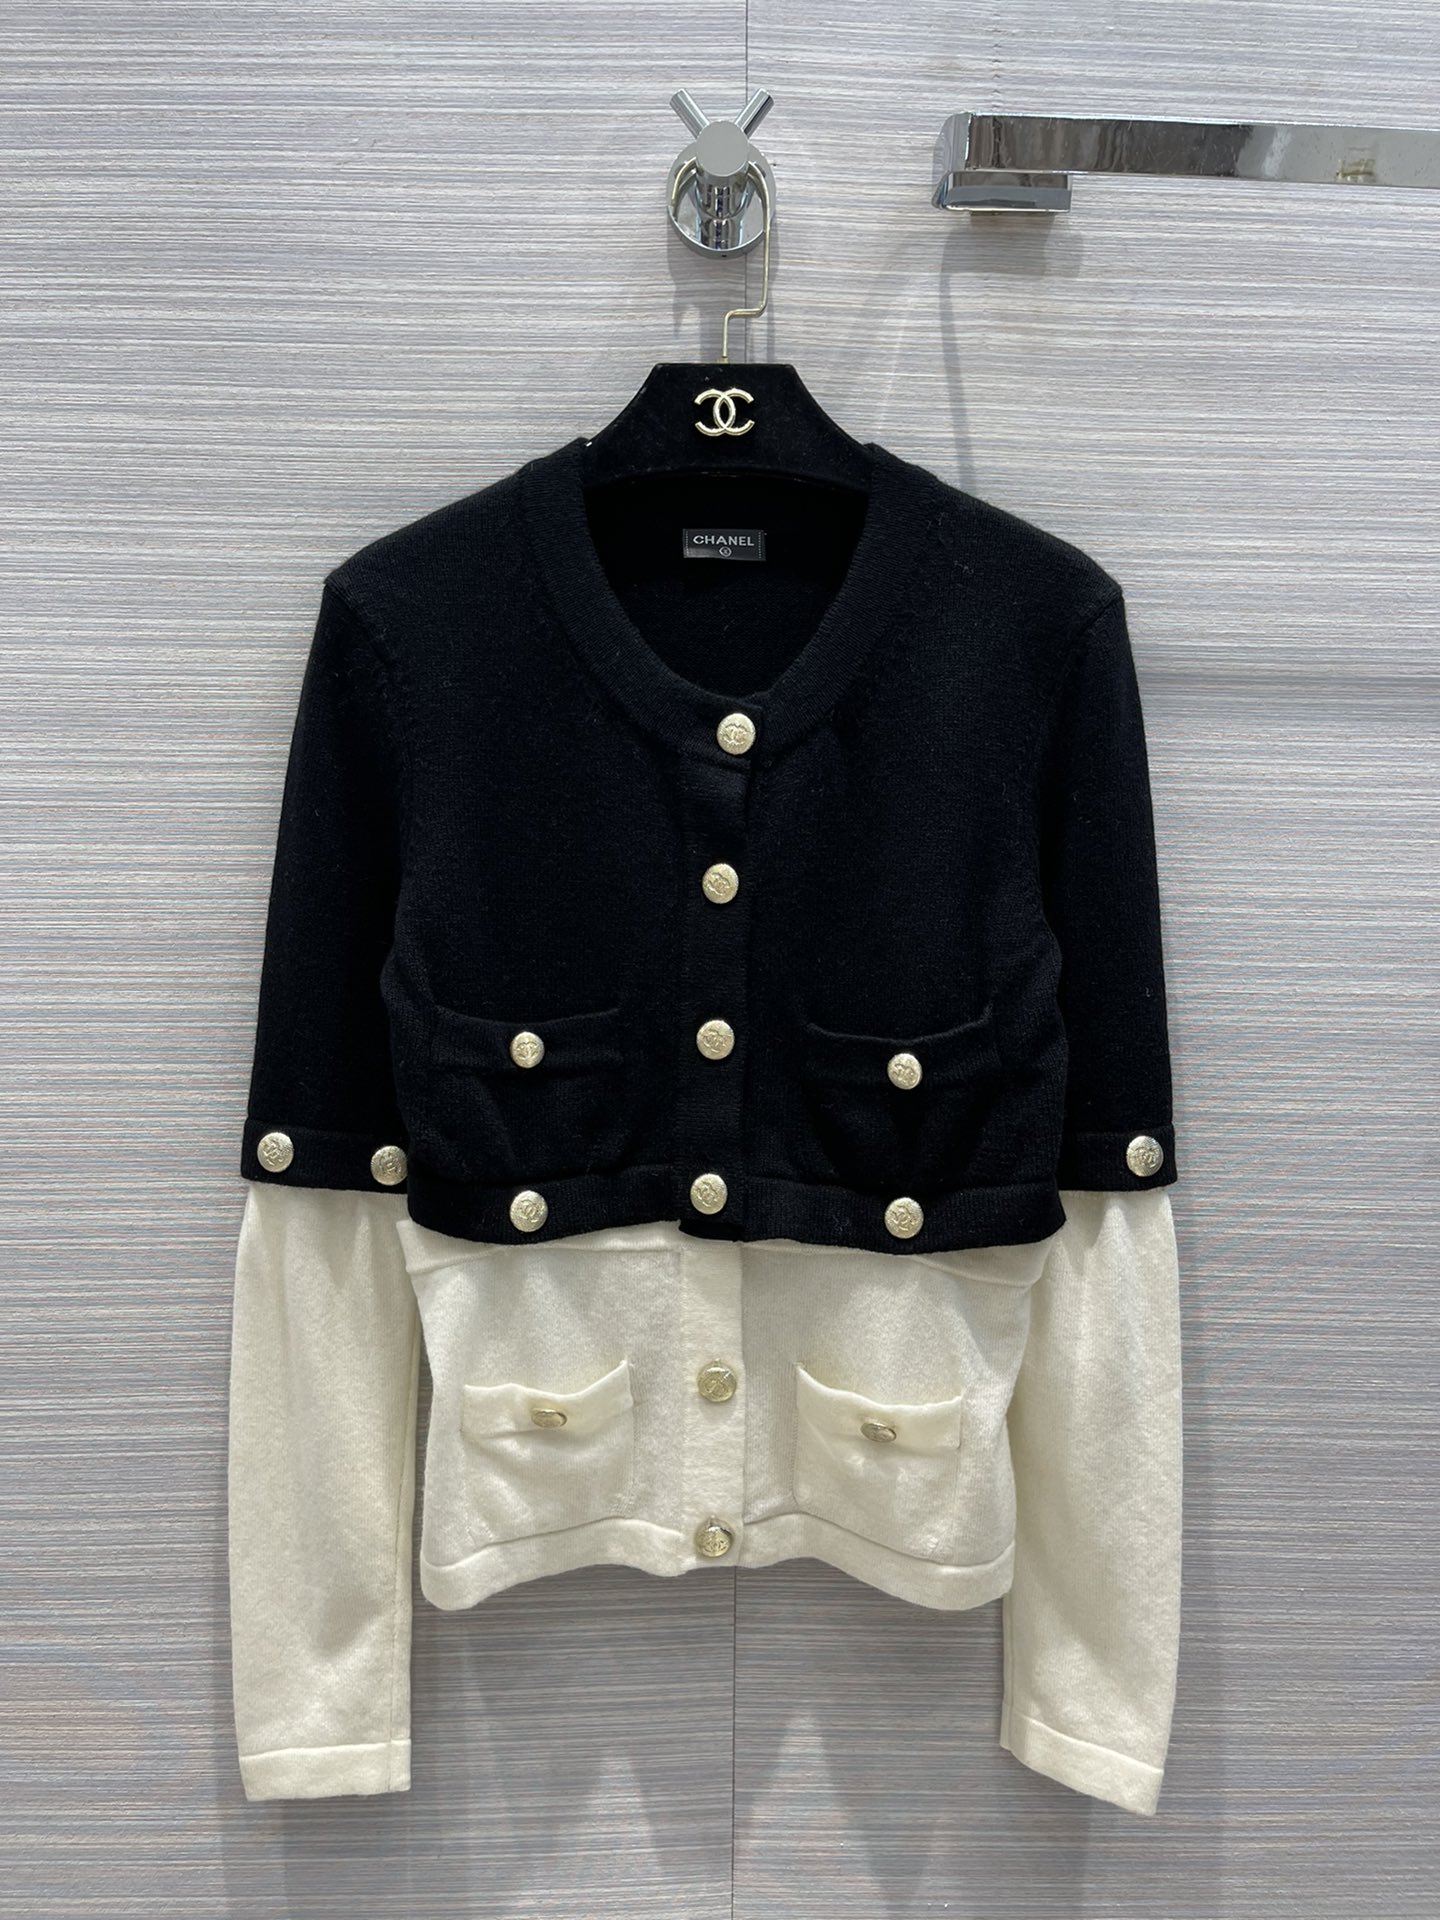 CHANEL  Jackets  Coats  Chanel Cc9 Jennie Blackpink Blazer Jacket Size  Small 36  Poshmark